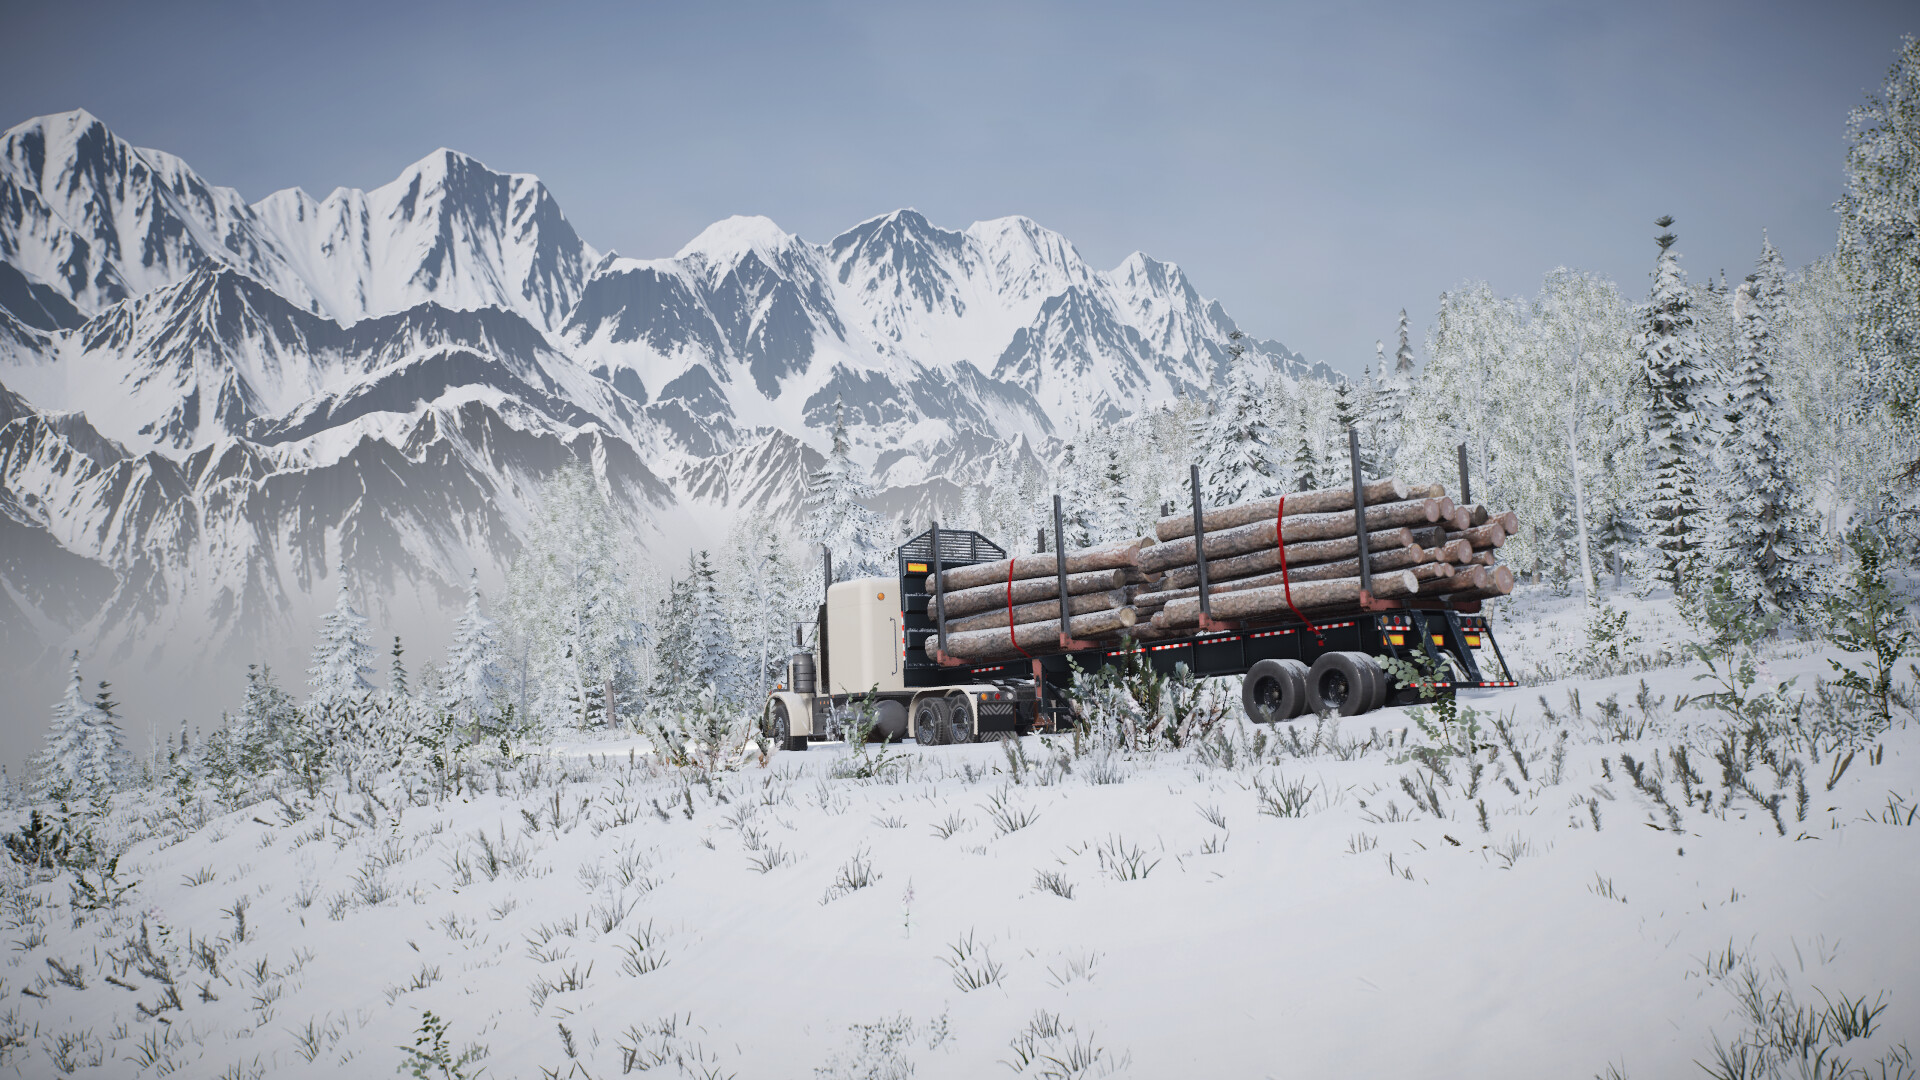 Alaskan Road Truckers Steam Account